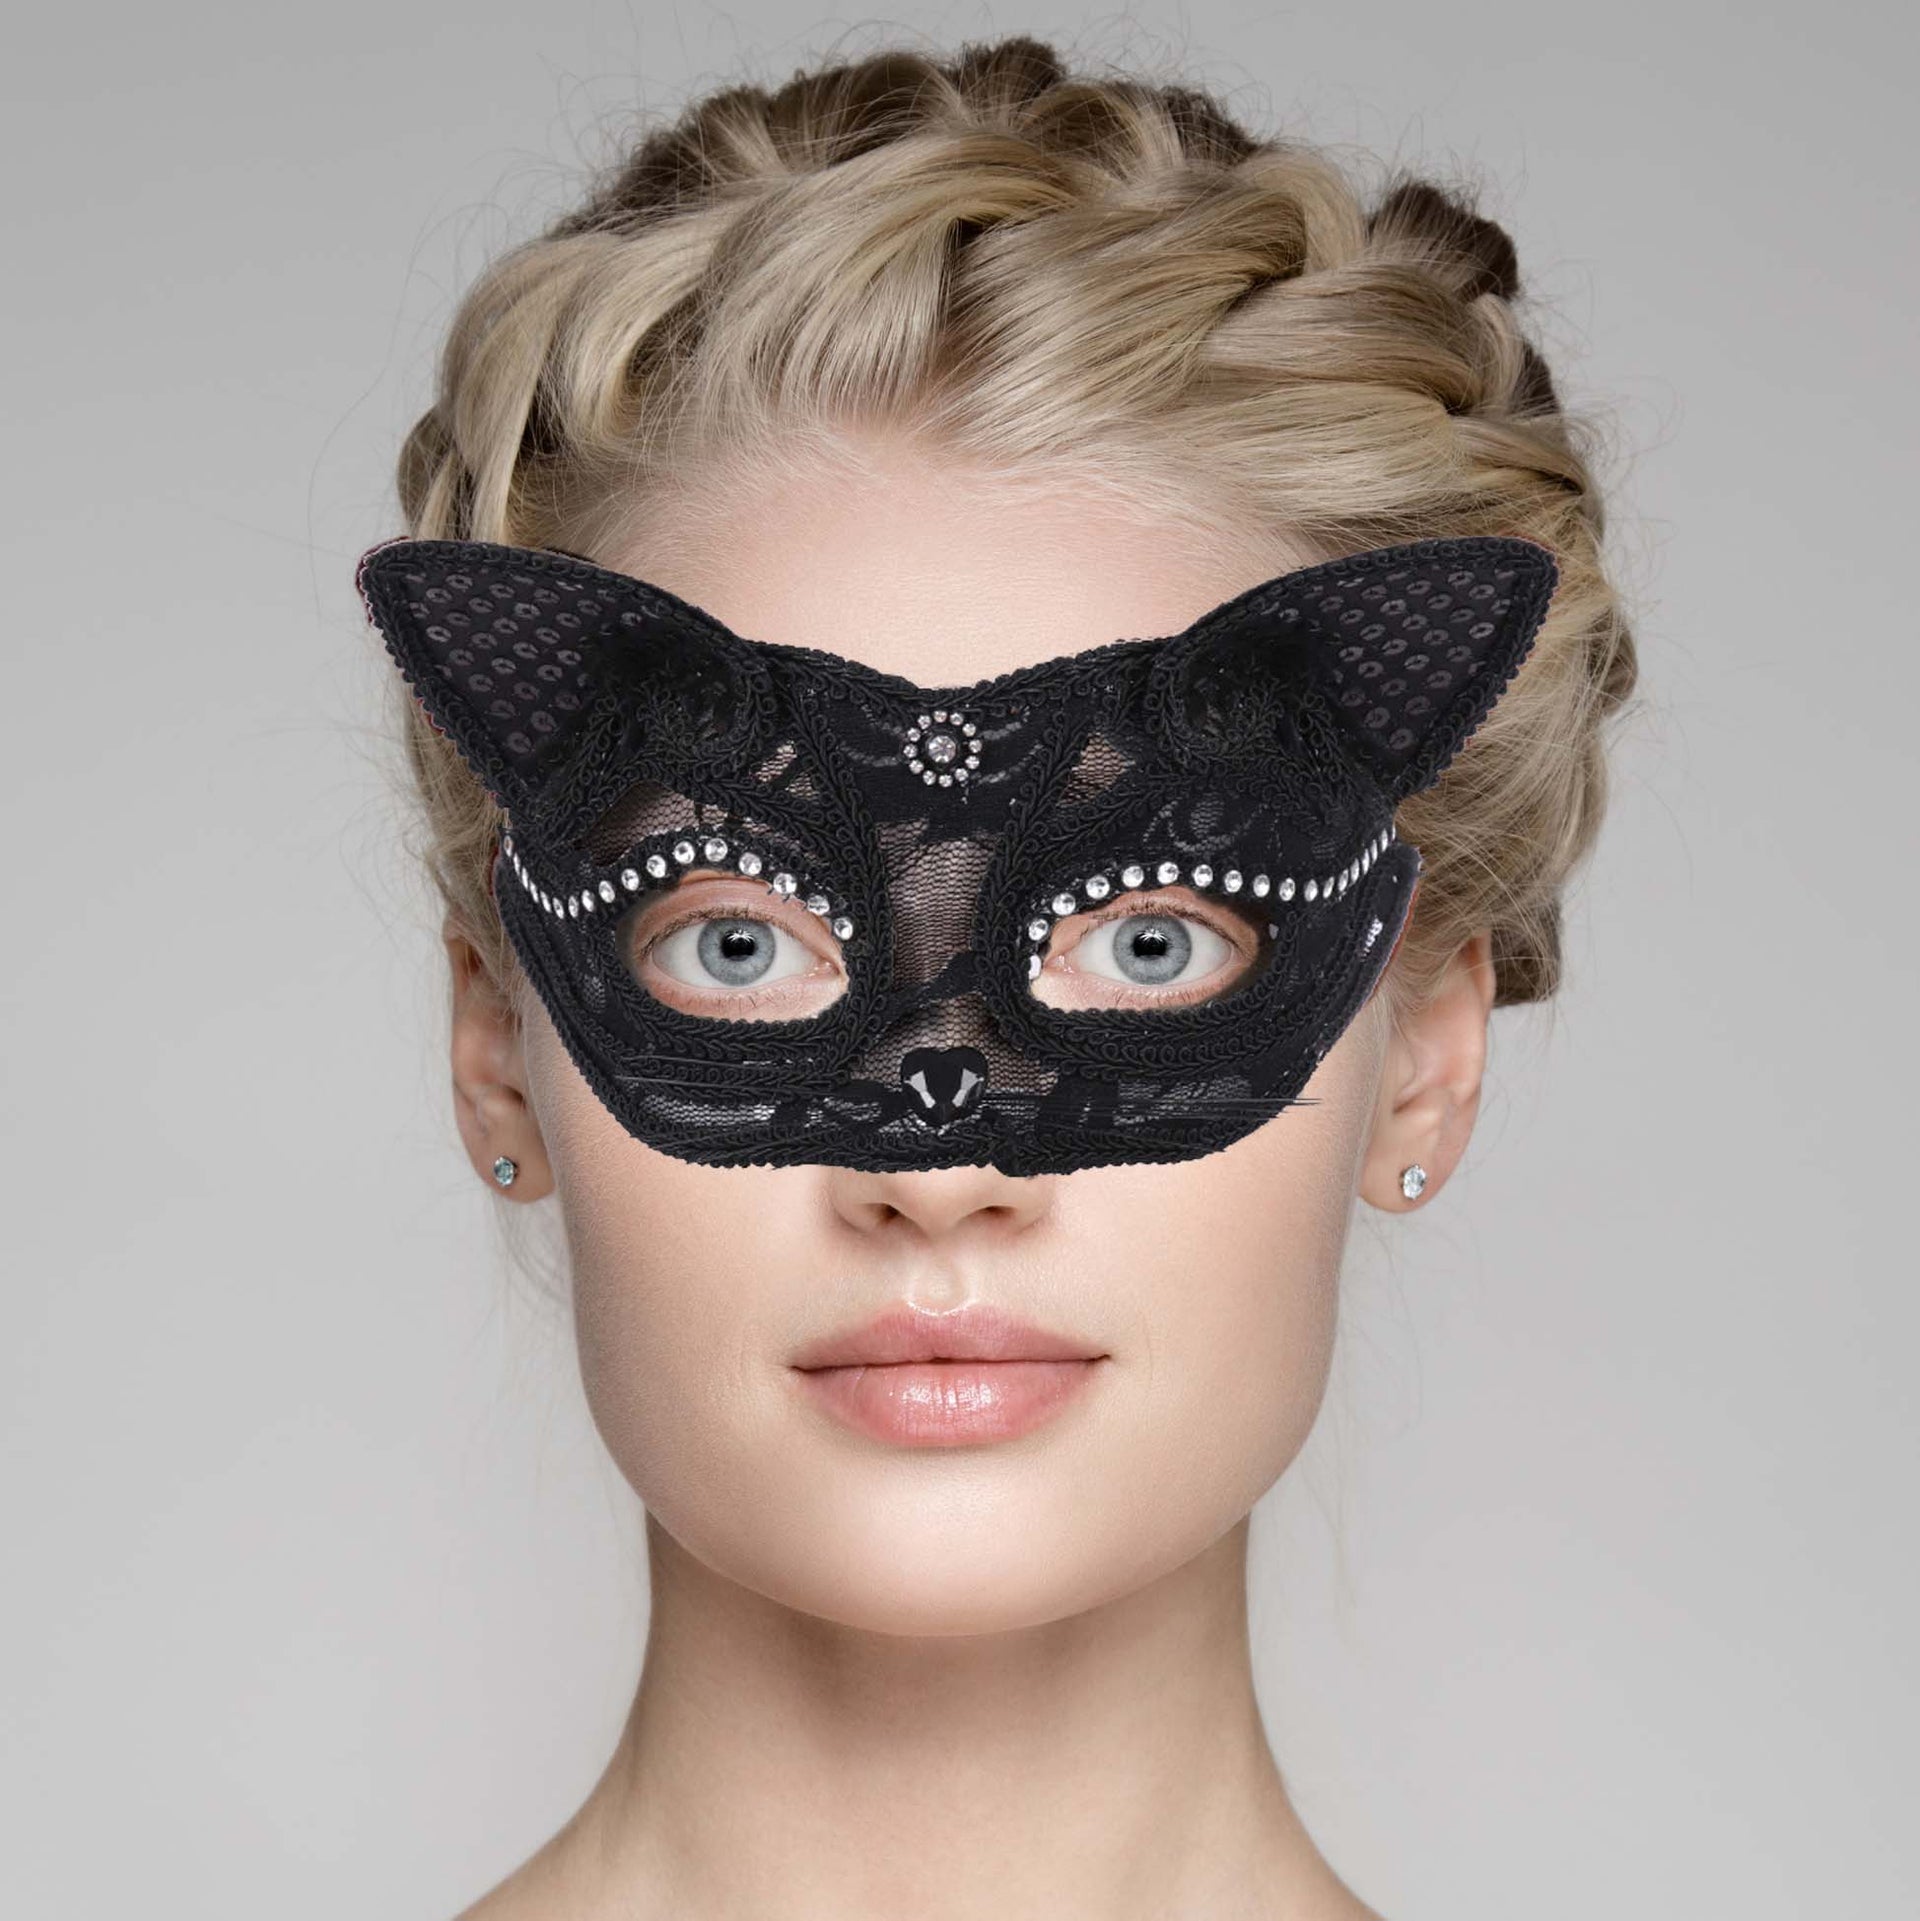 nevermindyrhead Black Cat Masquerade Lace Rhinestones Mask For Fancy Dress Christmas Halloween Costume Party Girls Women